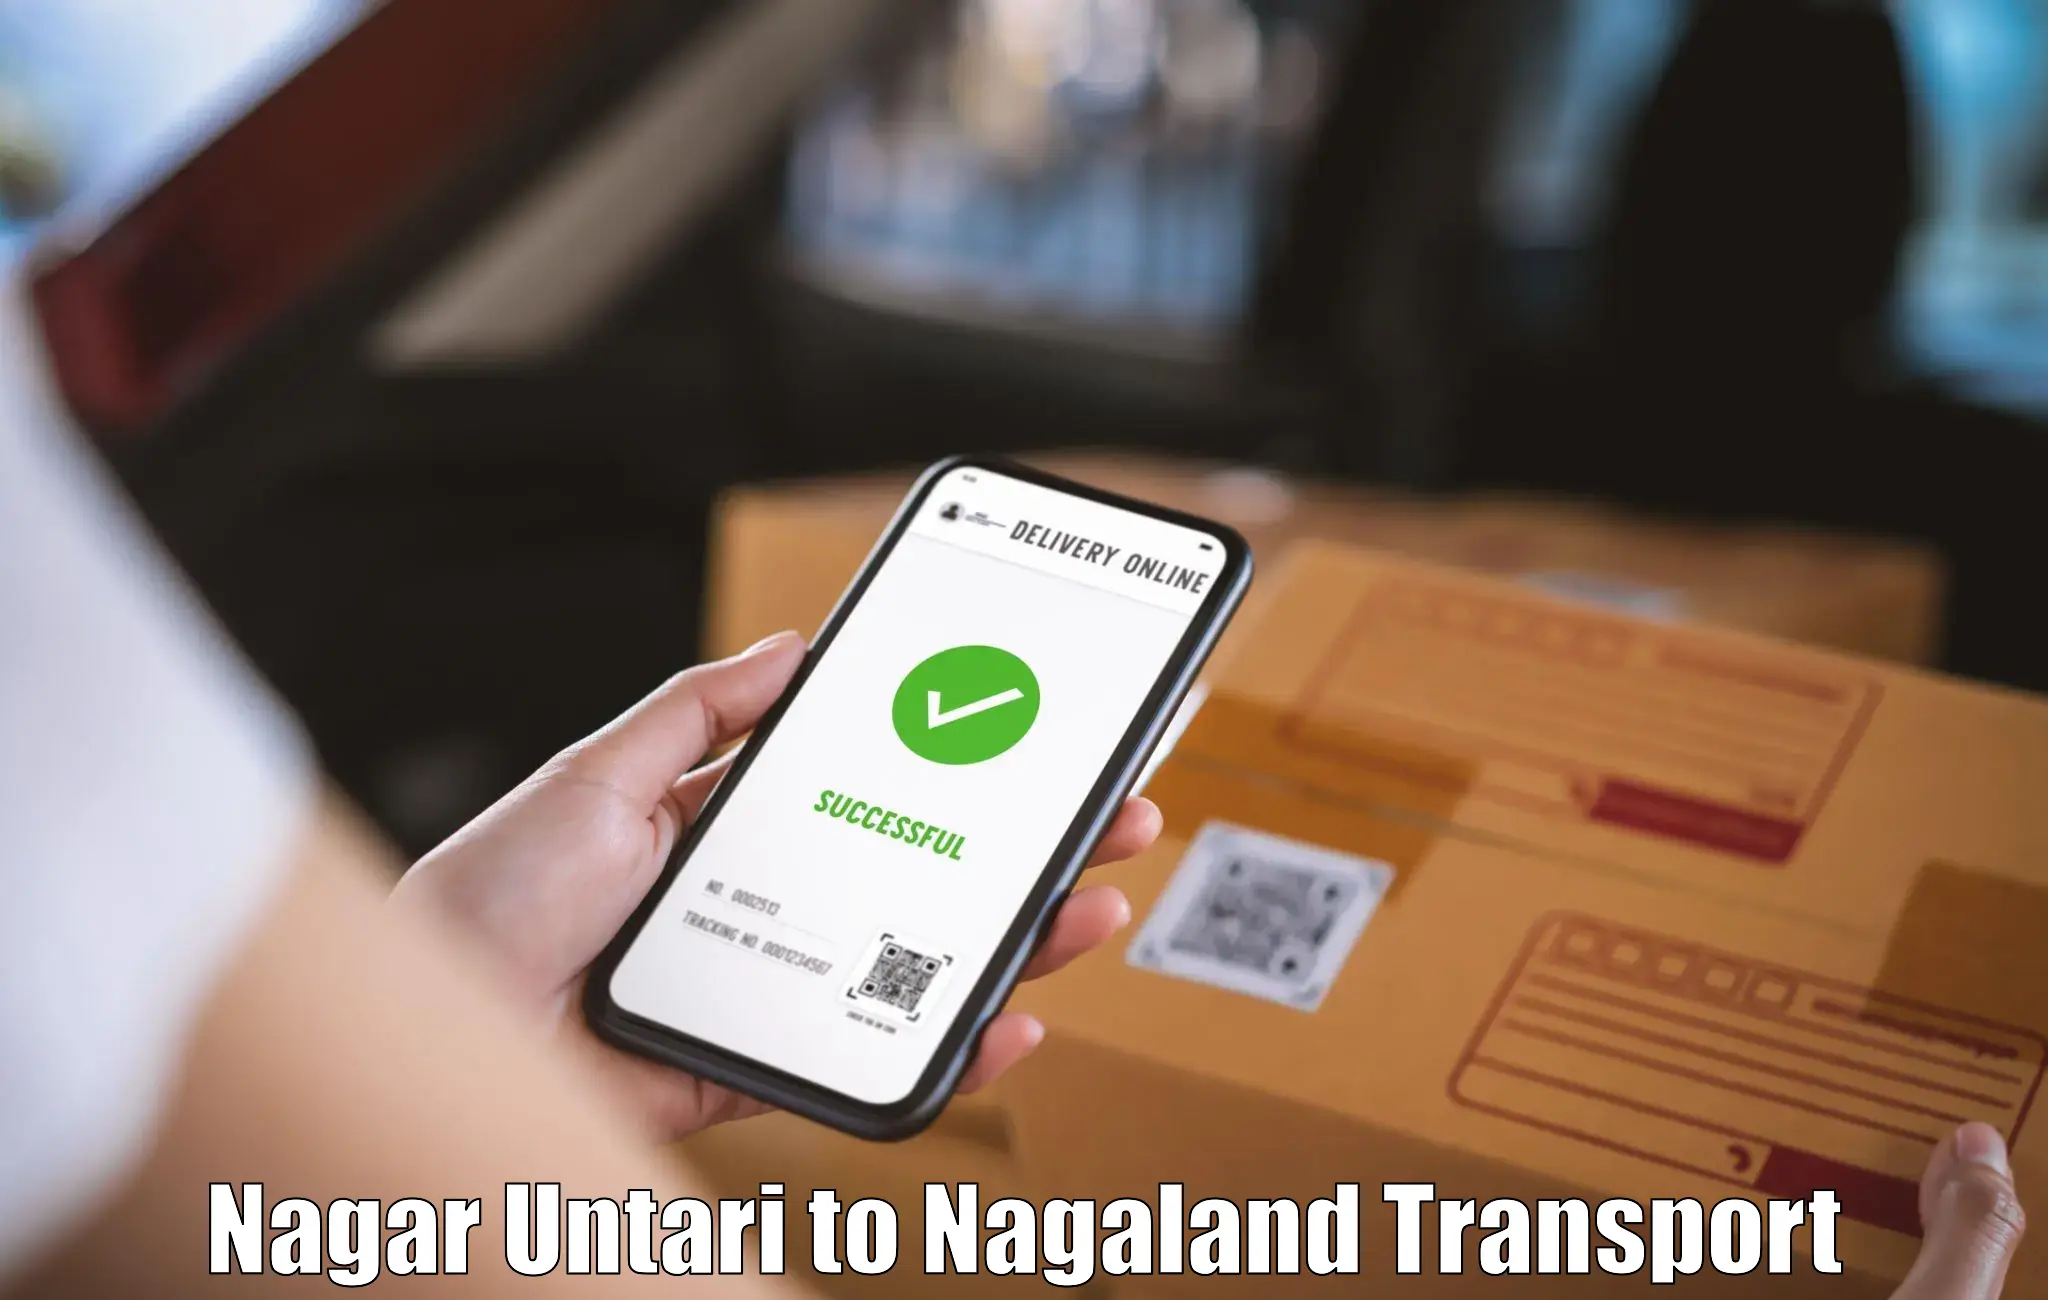 Intercity transport Nagar Untari to Nagaland